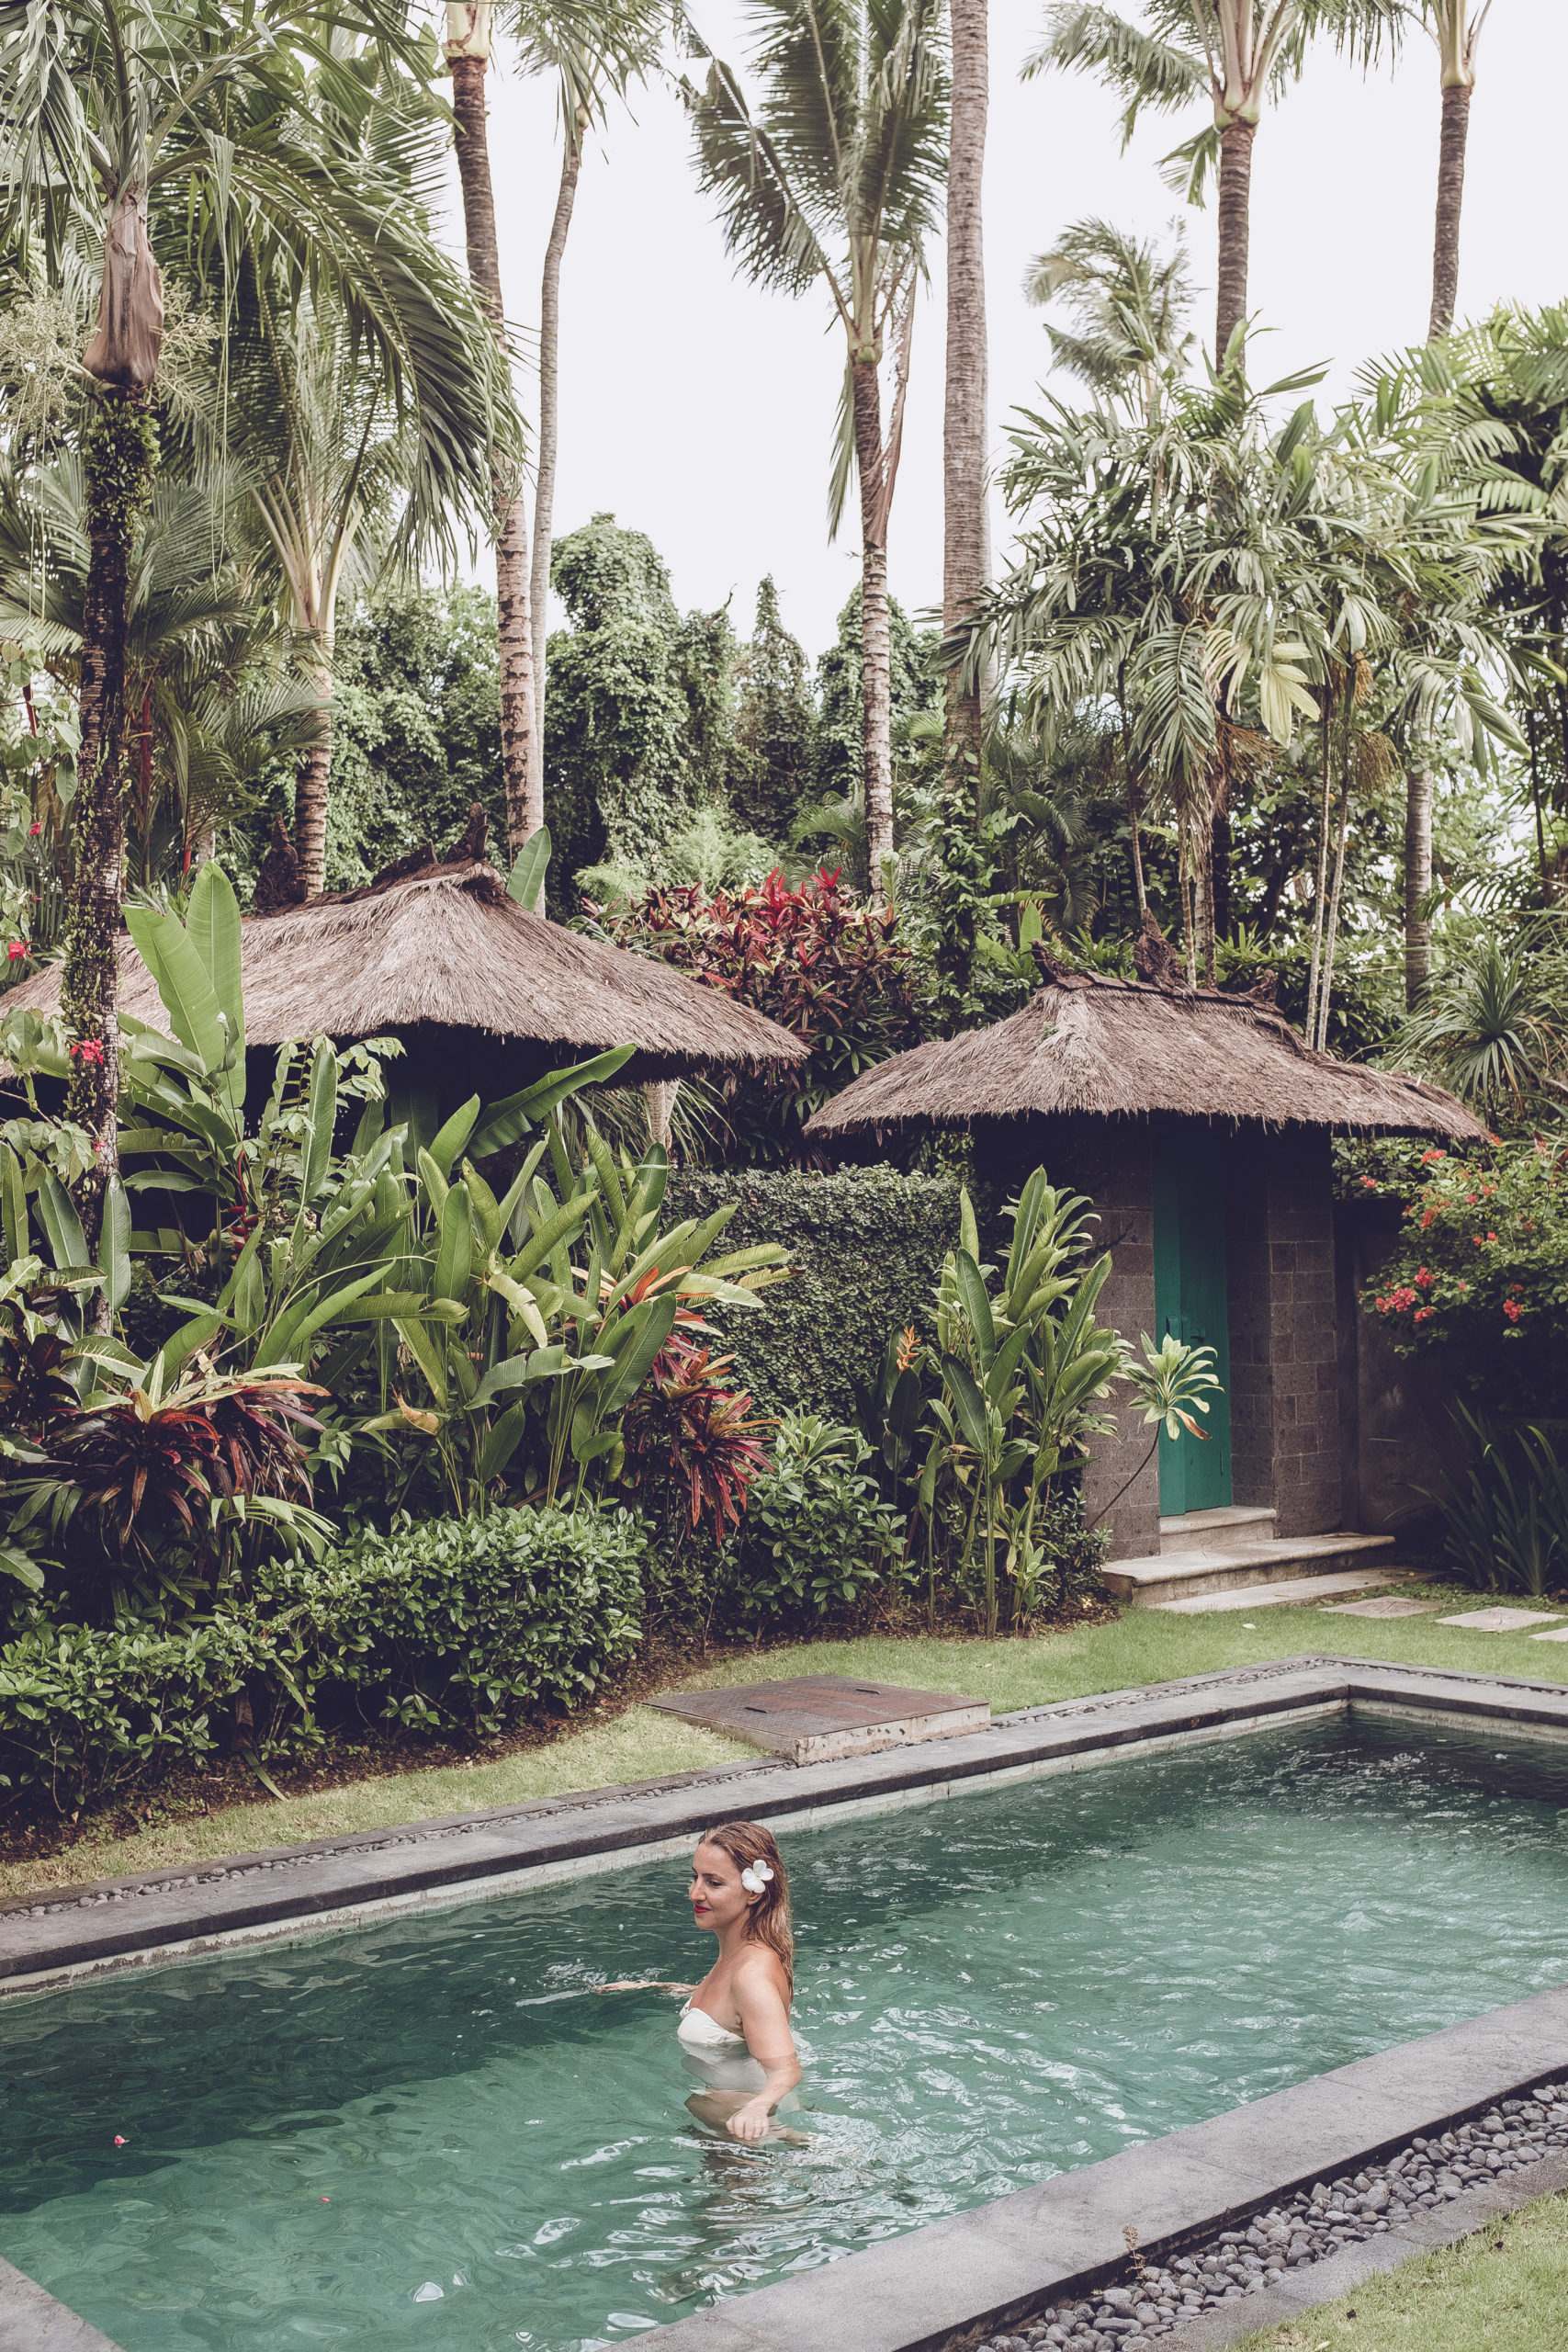 Sukhavati Ayurvedic Retreat and Spa in Bali 69